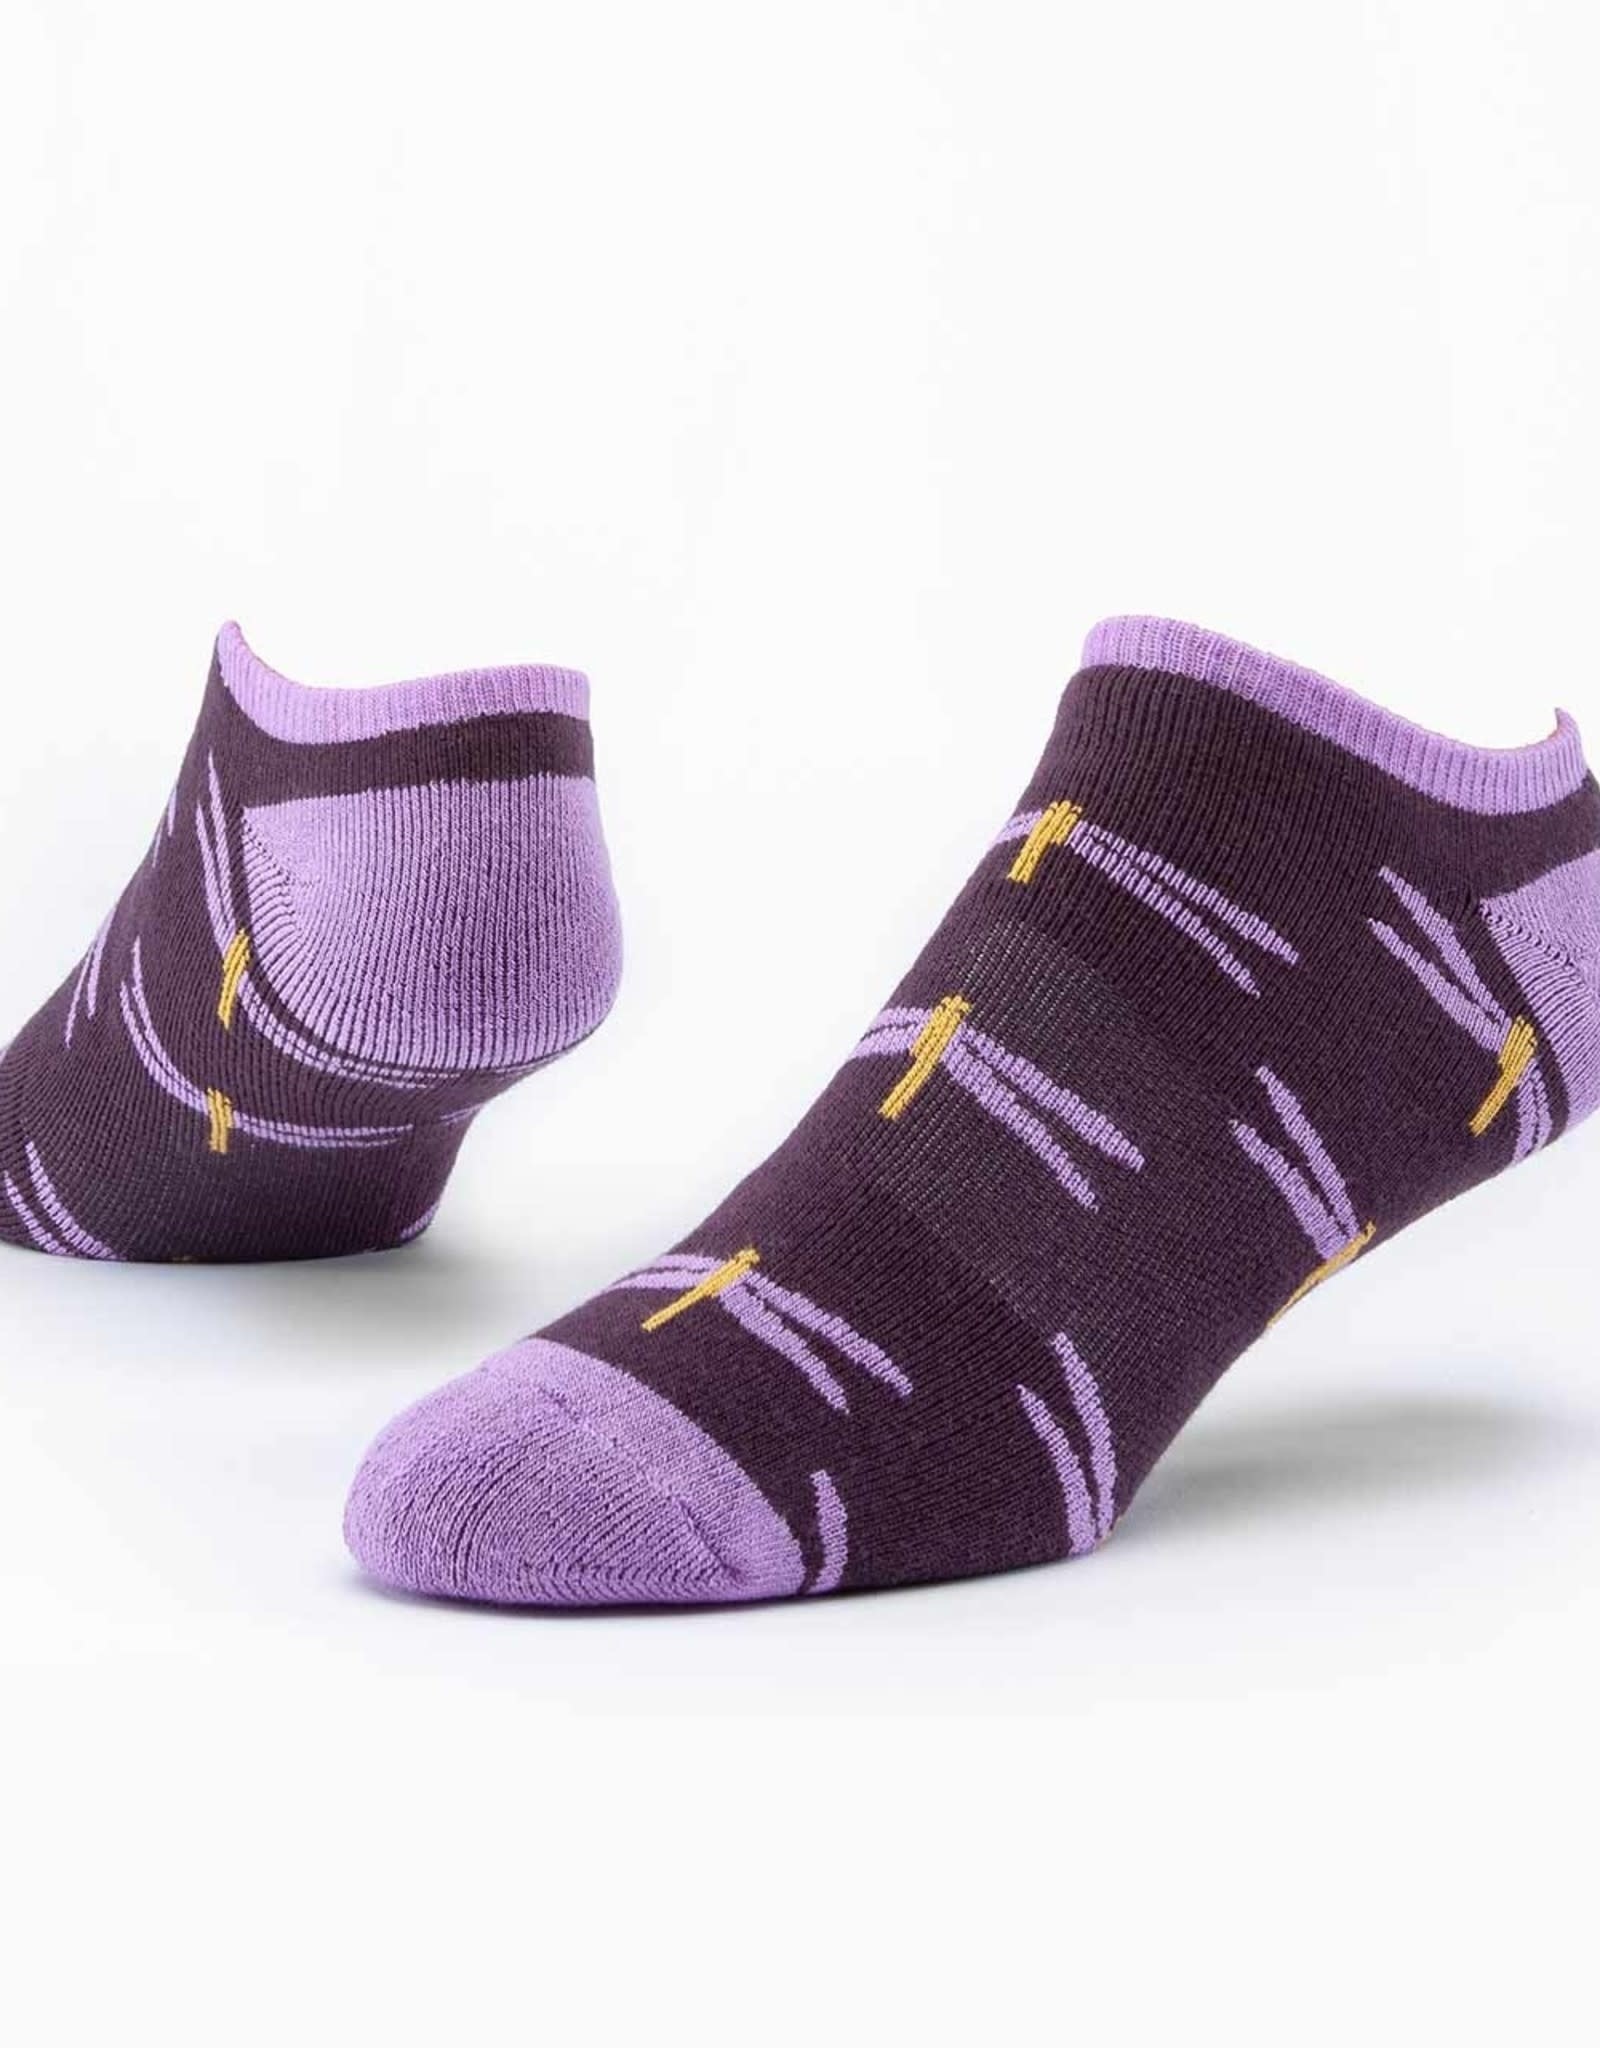 Maggie's Organics Footie Socks (Purple Dragonfly)